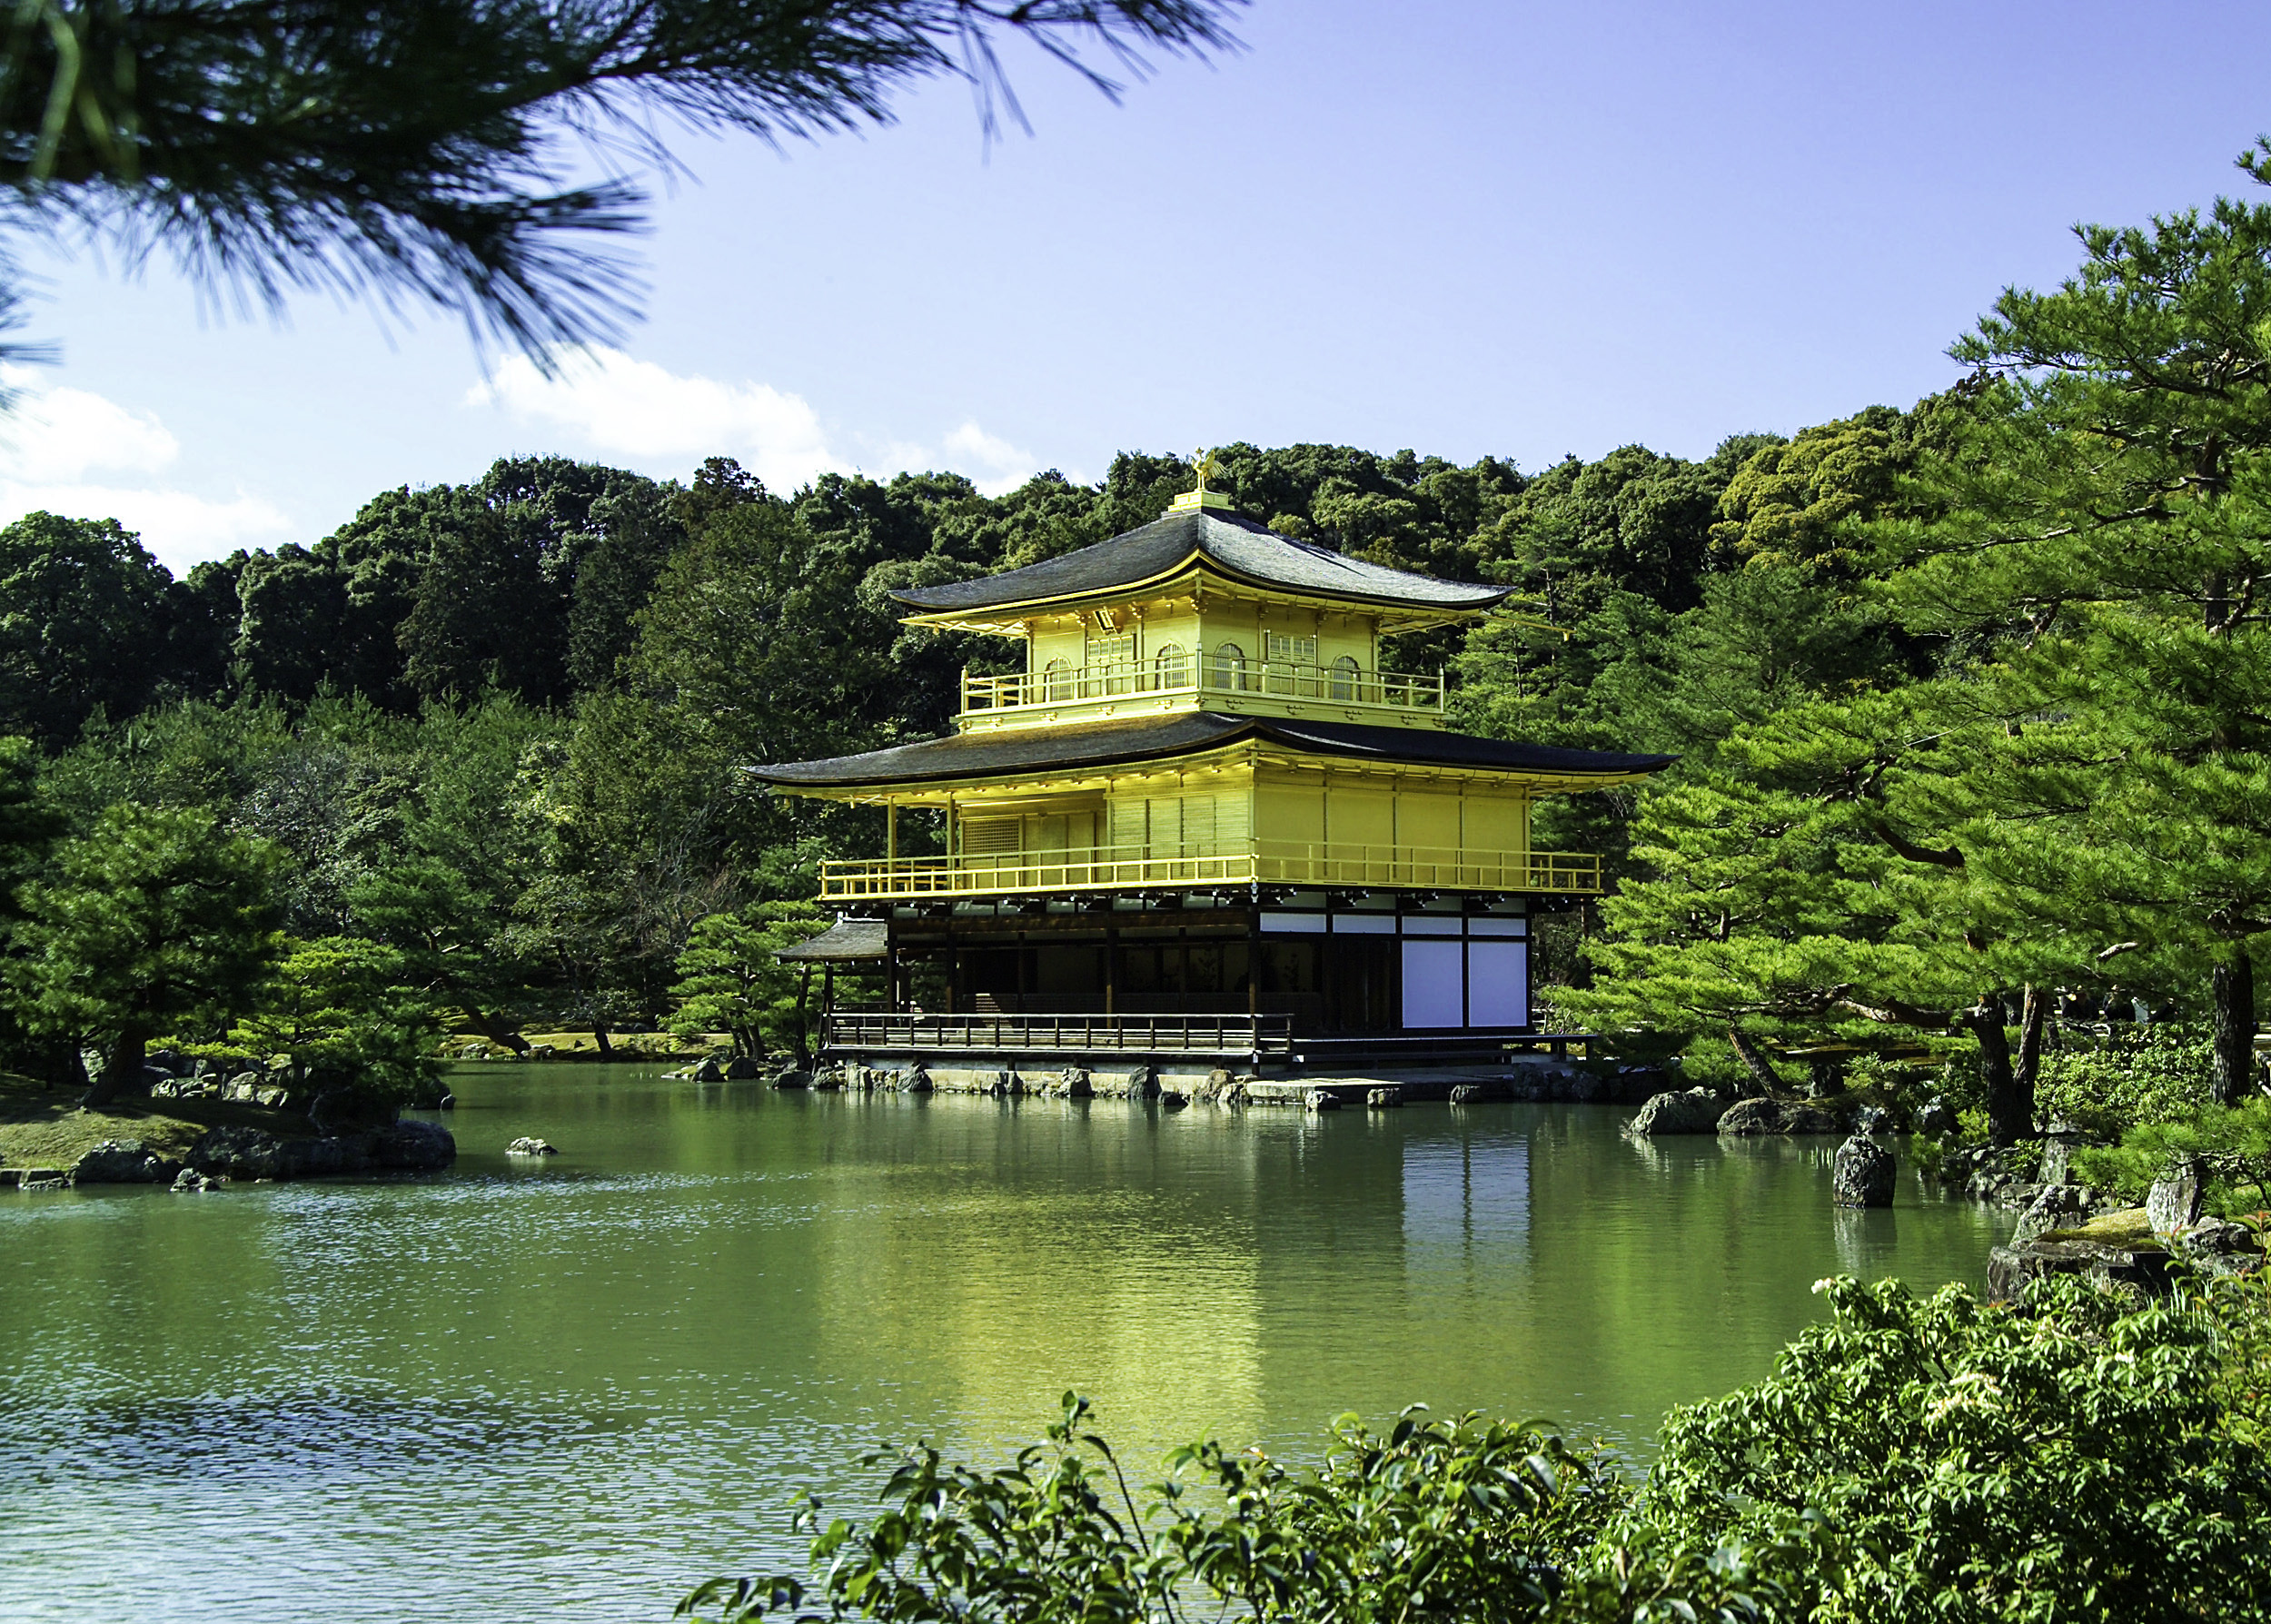 Golden Pavilion in Kyoto, Japan image - Free stock photo - Public